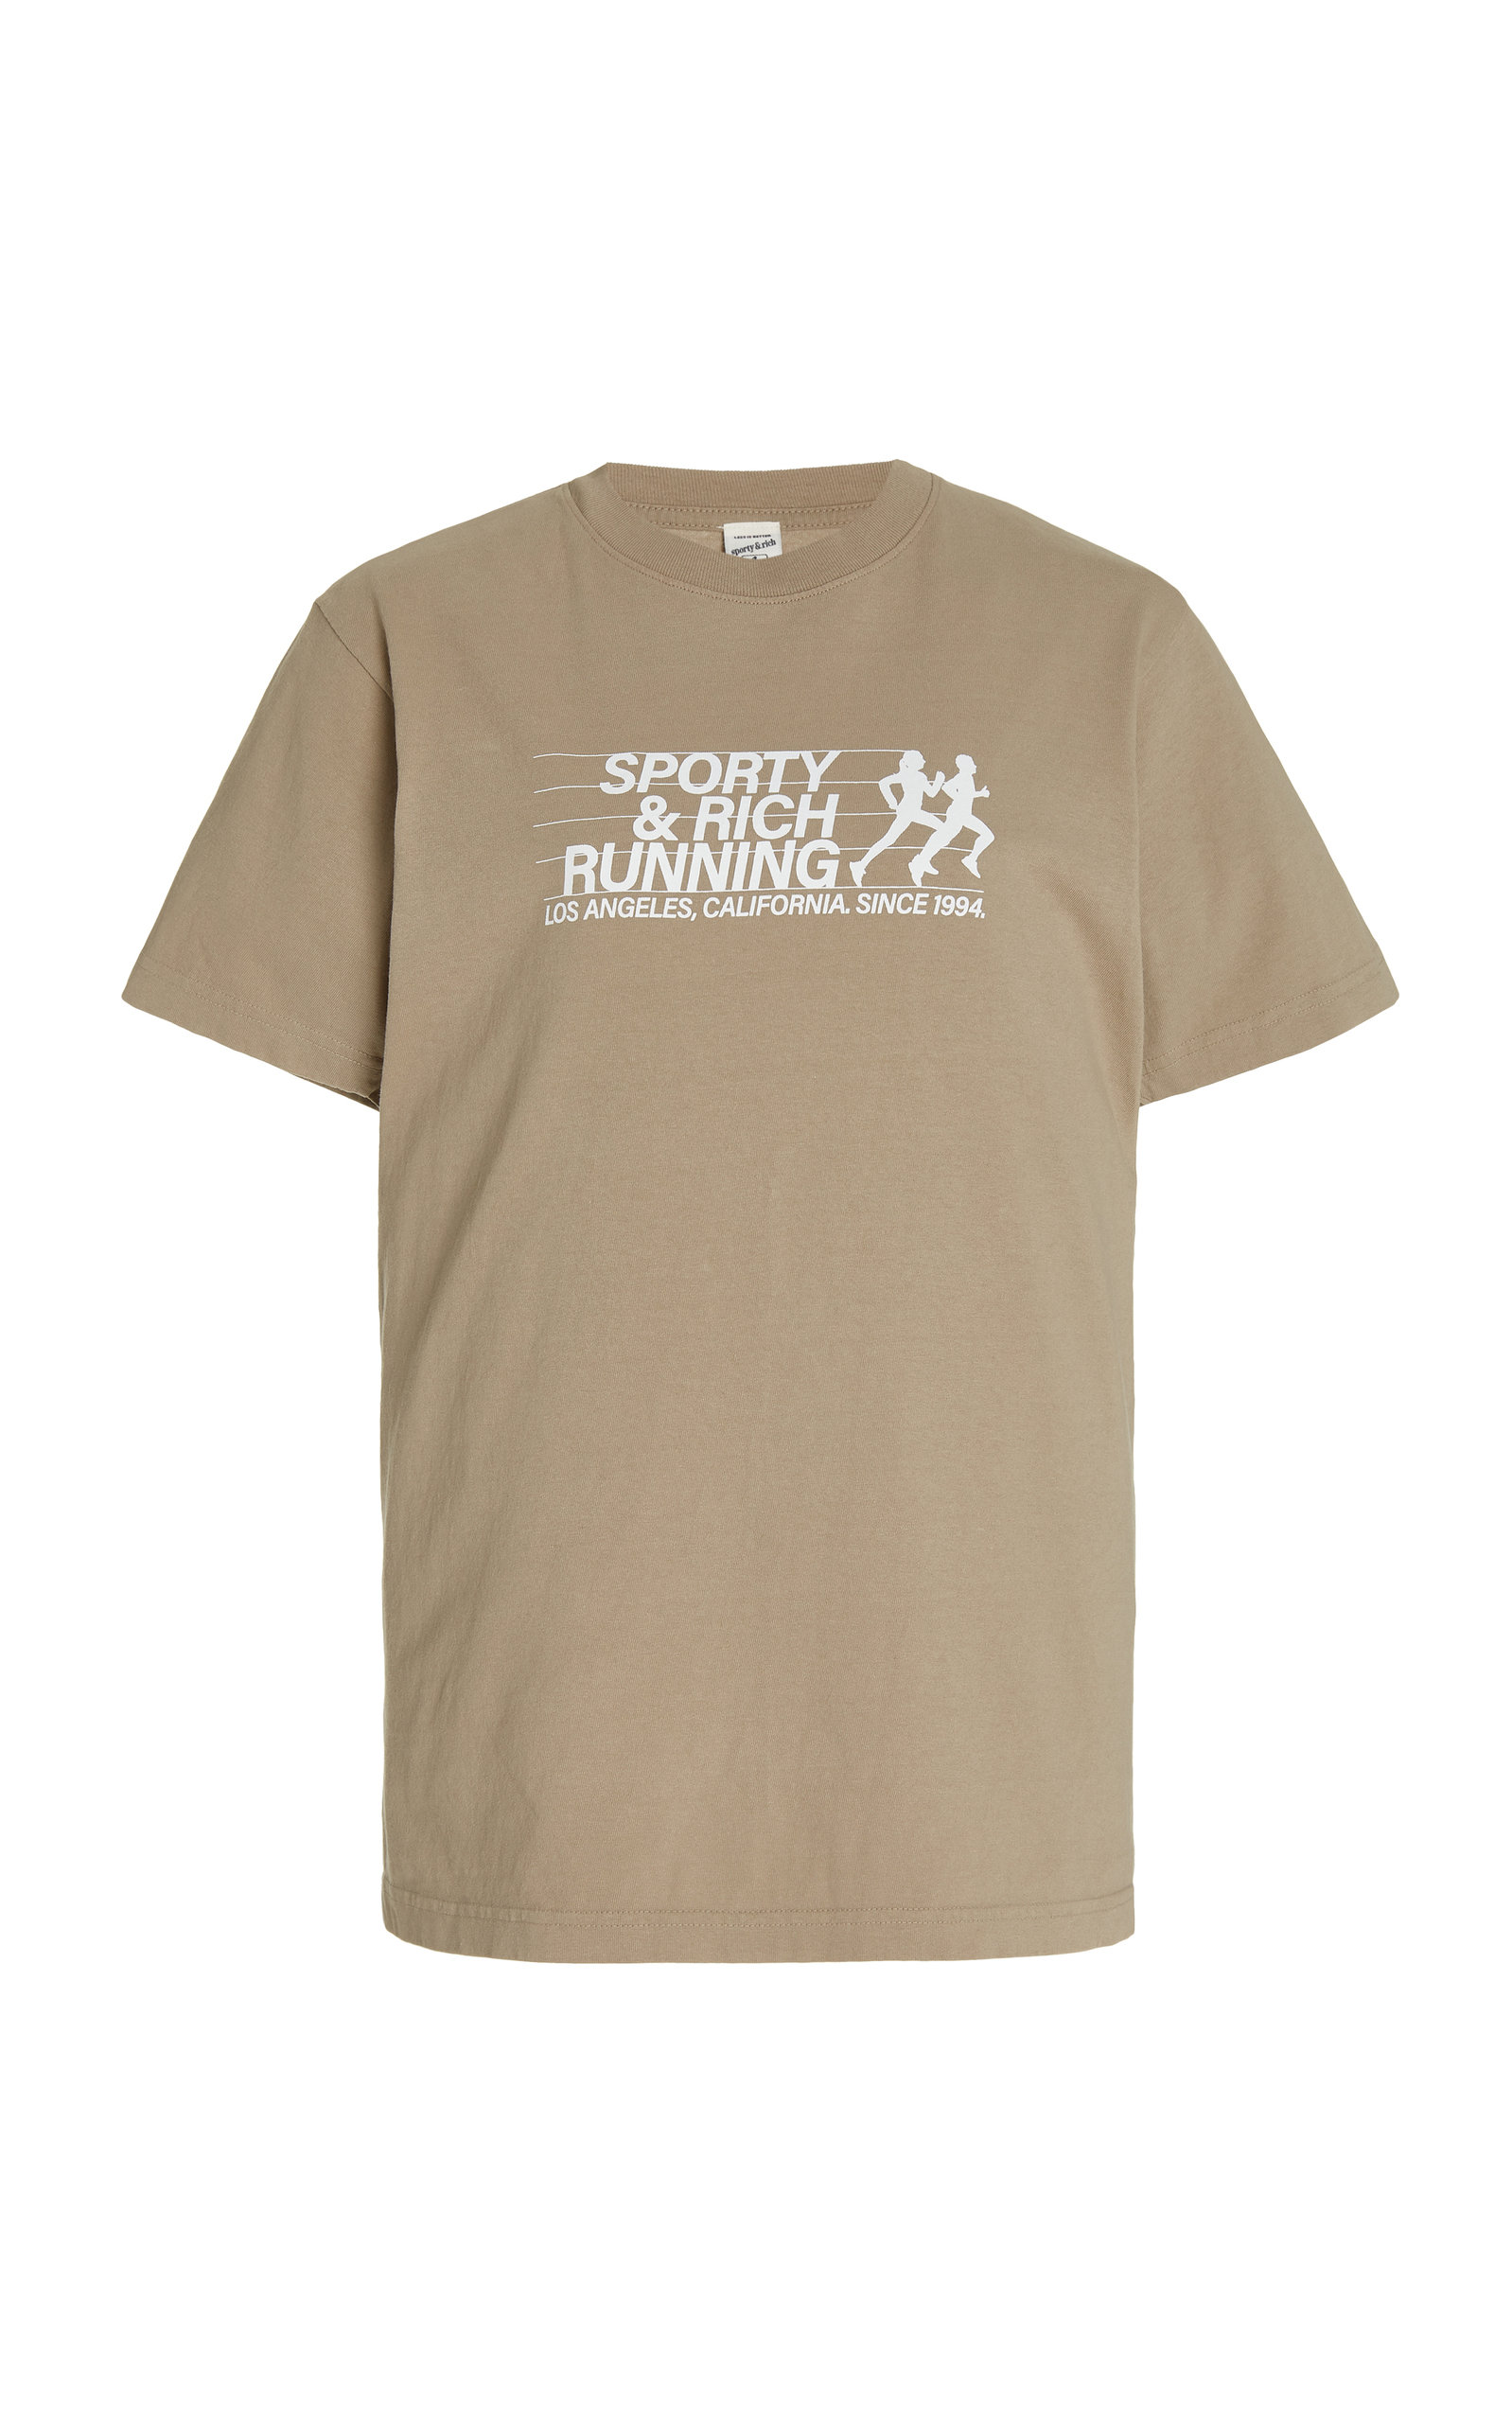 Sporty & Rich - Women's S&R Running Cotton T-Shirt - Brown - Moda Operandi